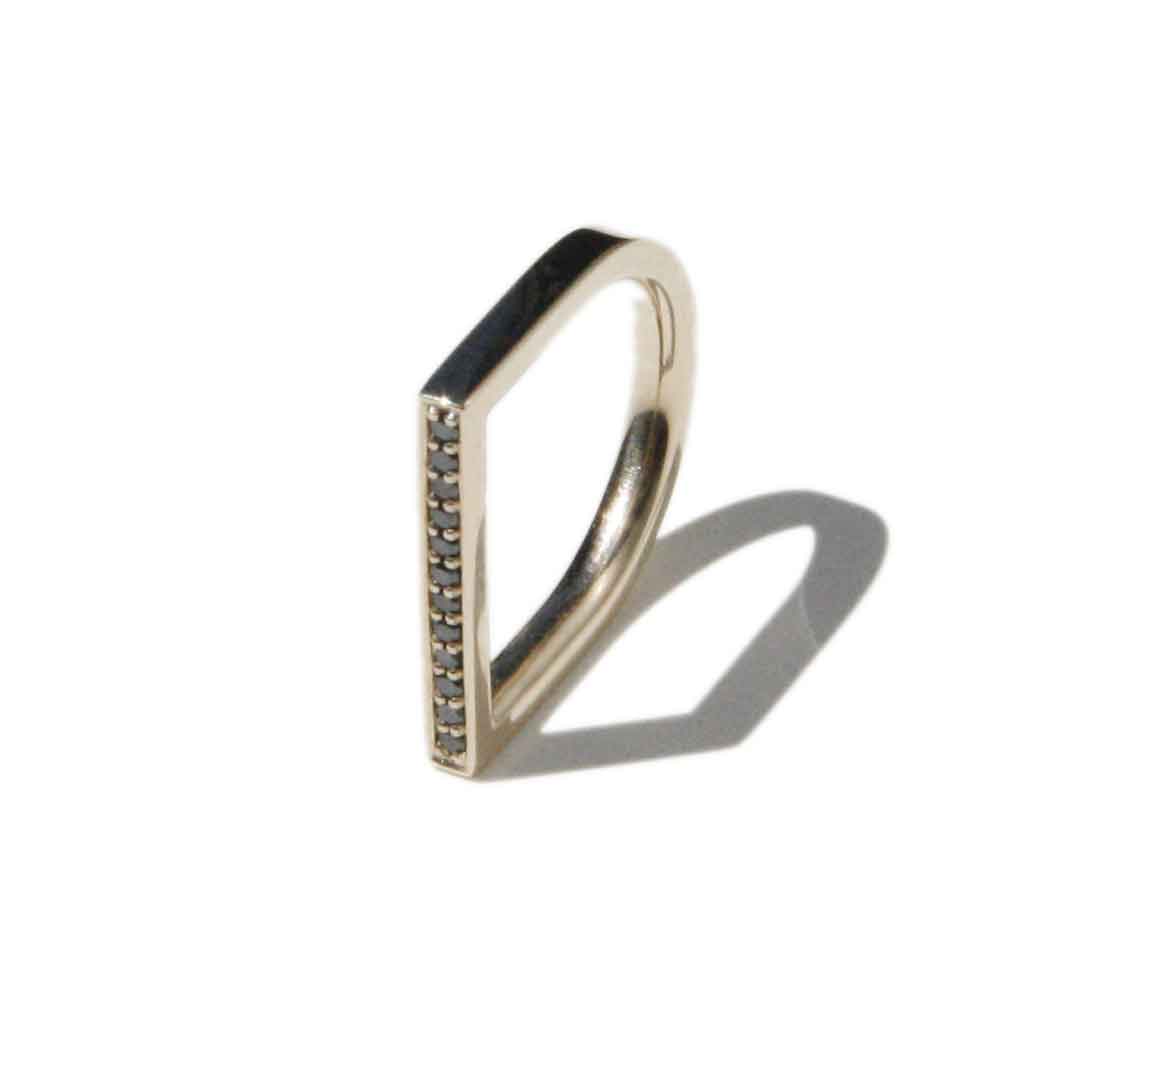 'U' shaped dress ring